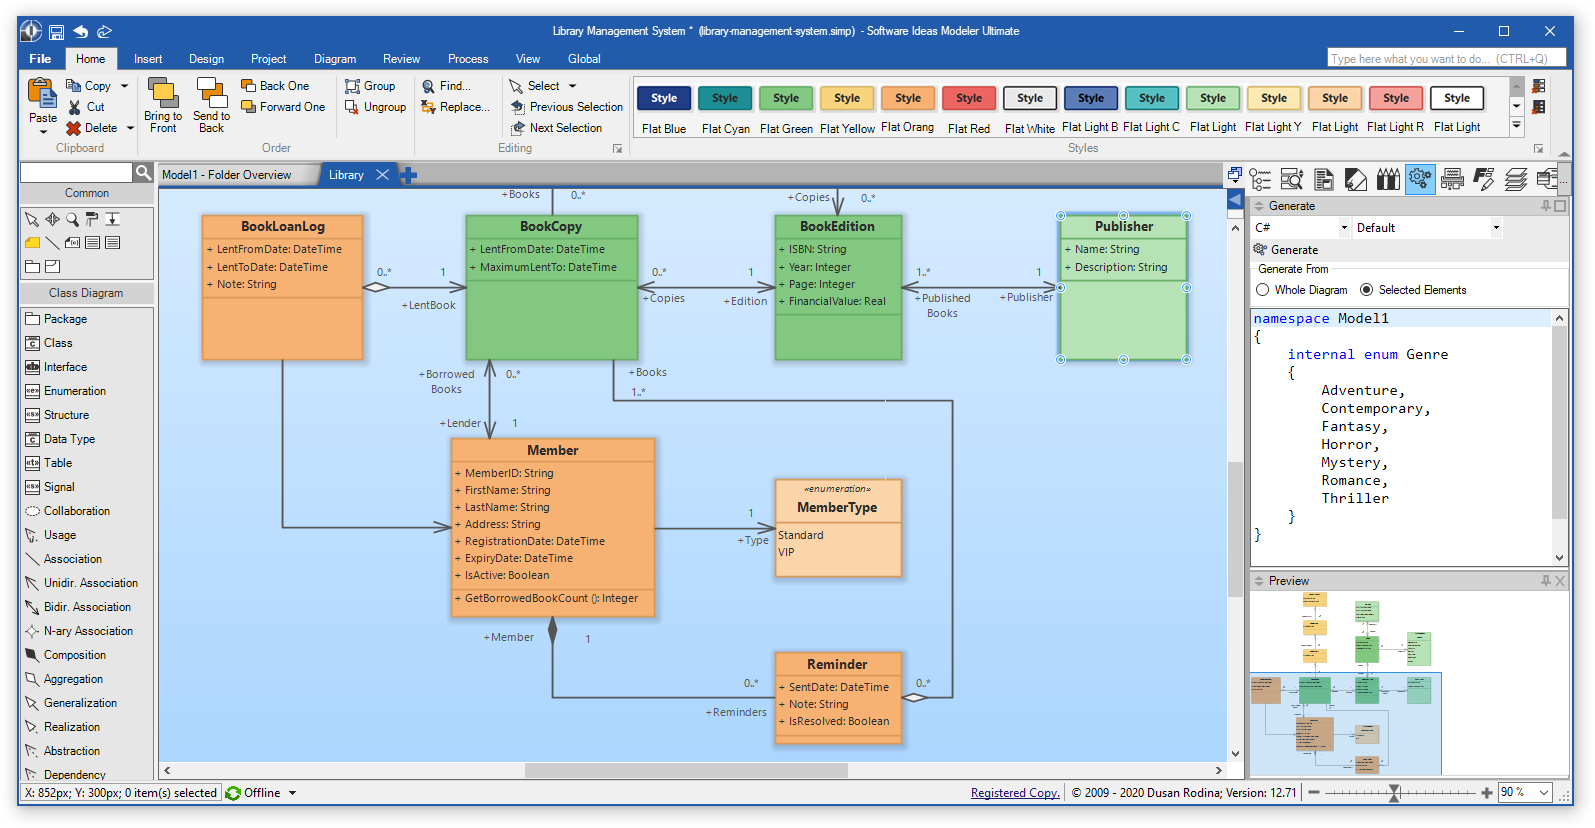 UML Editor - Software Ideas Modeler 12.71